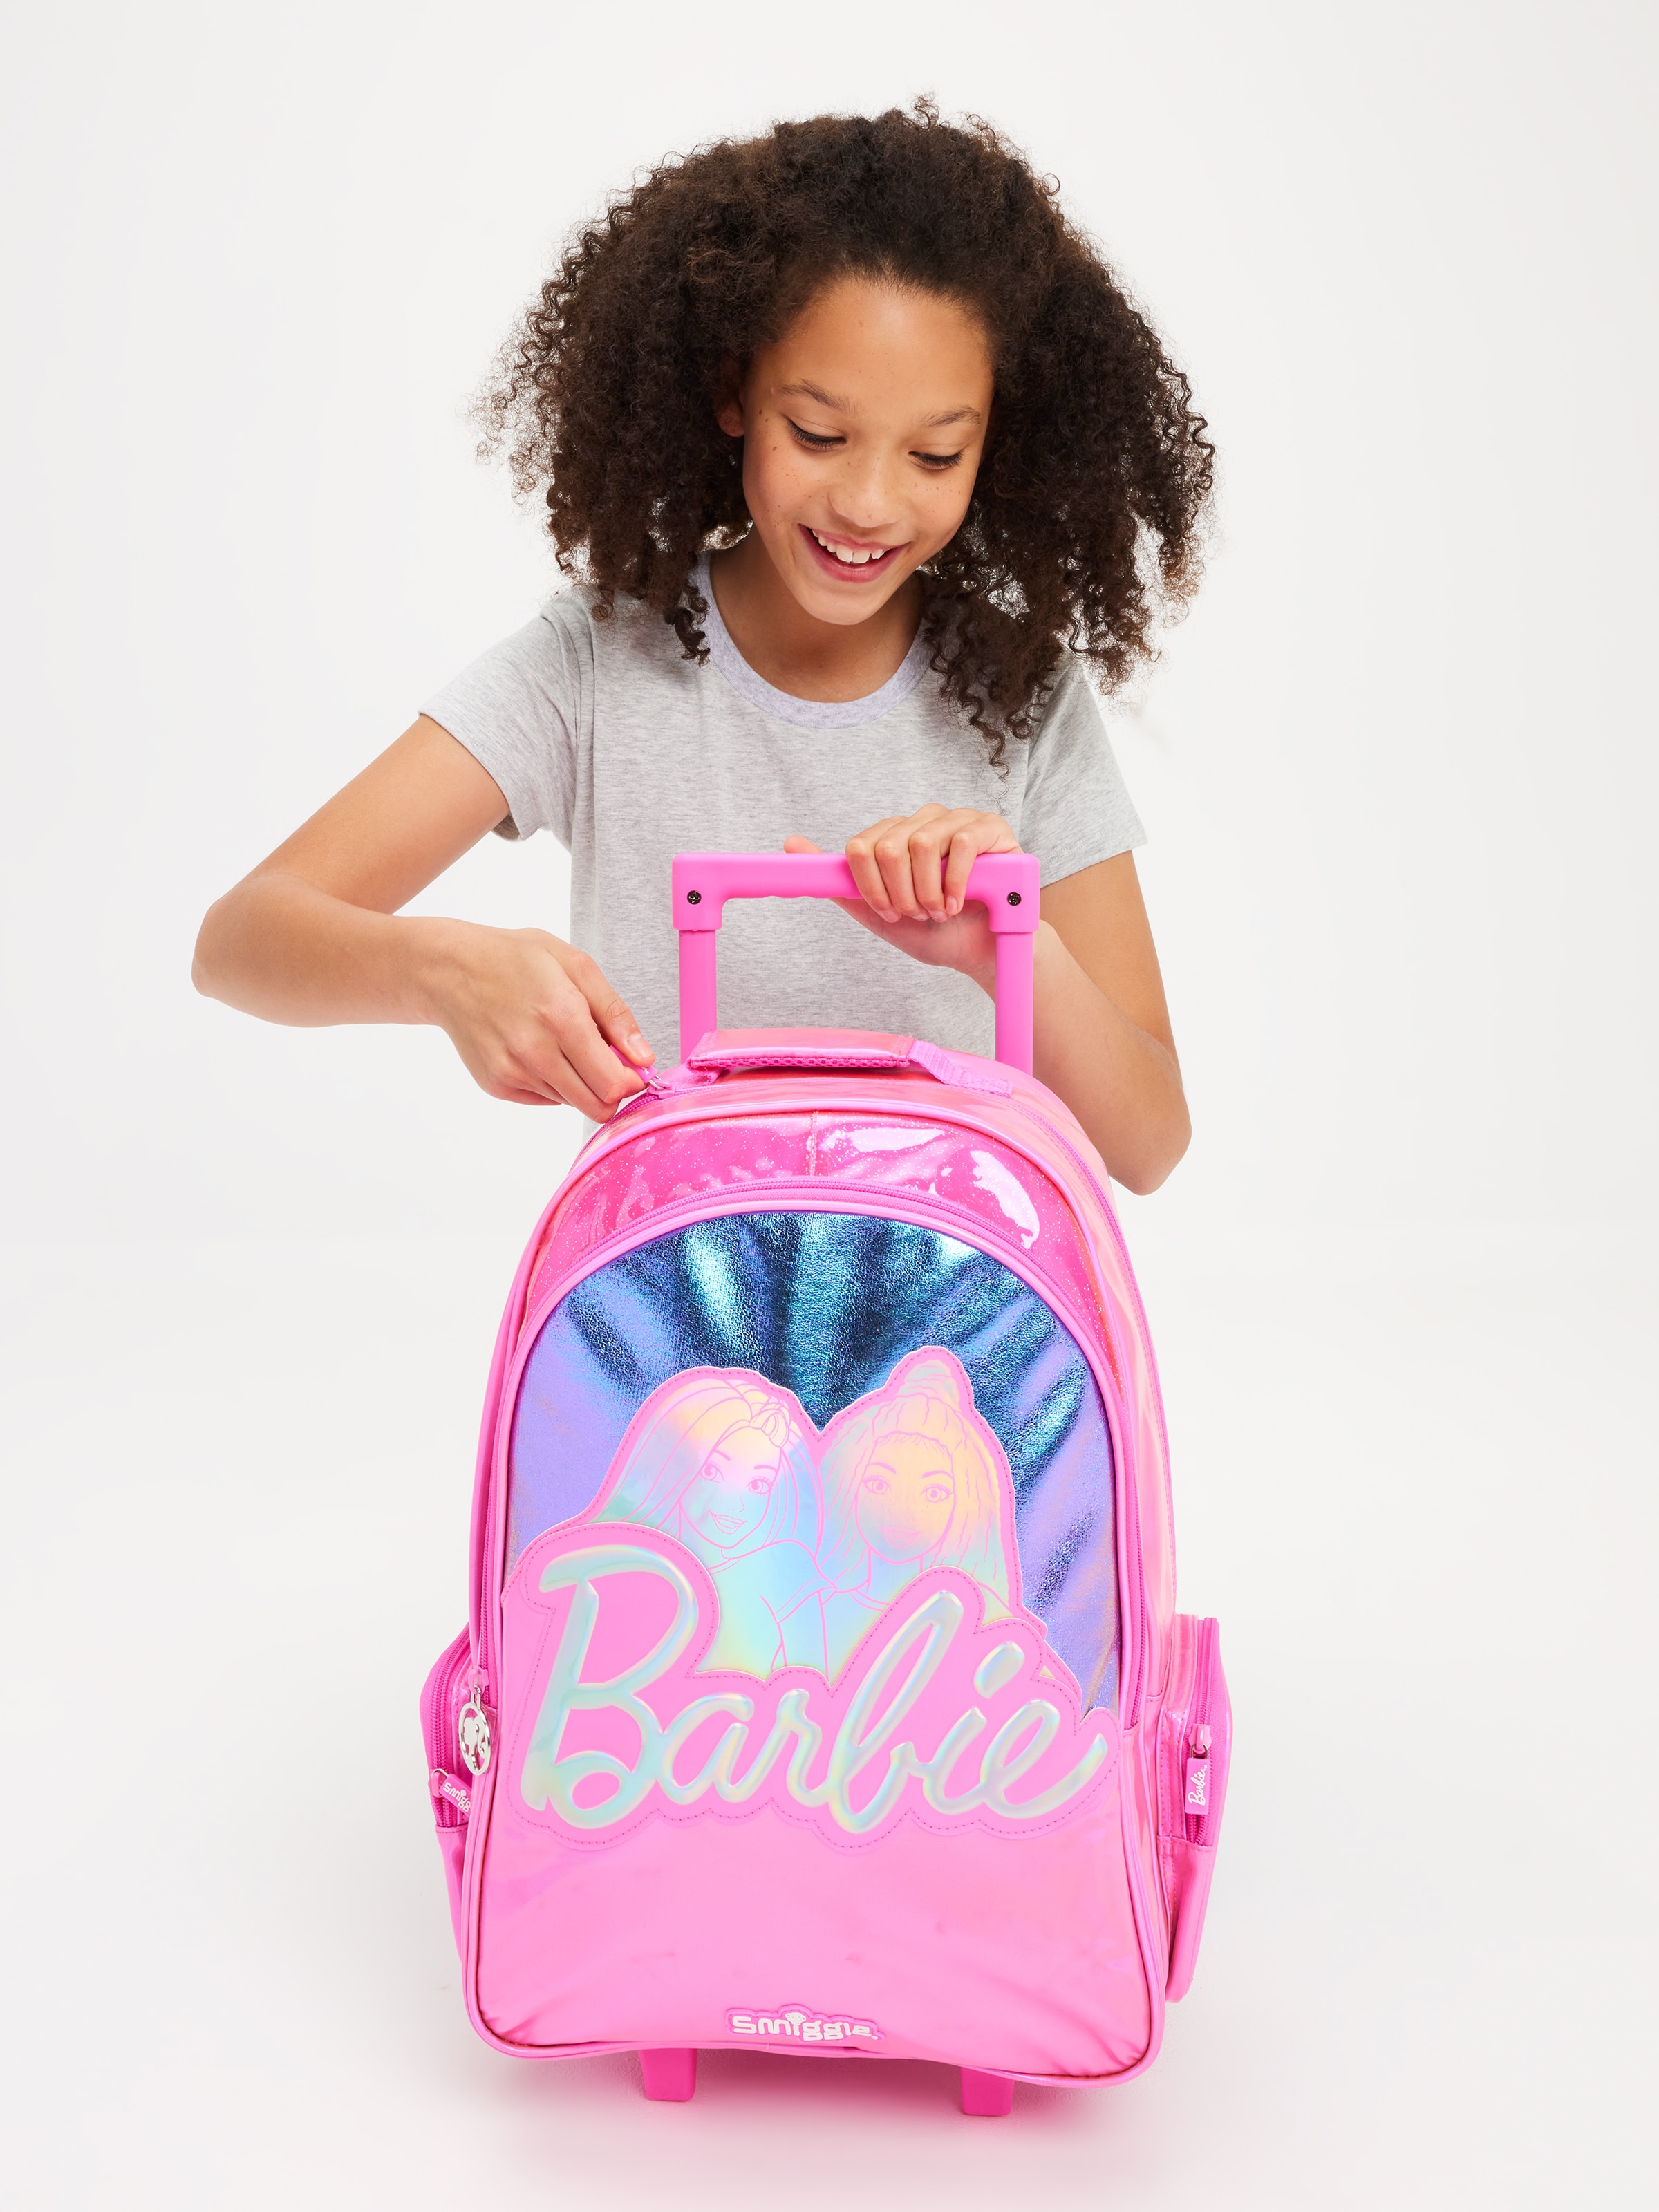 Trucare - Barbie Kids Travel Luggage | PlayOne